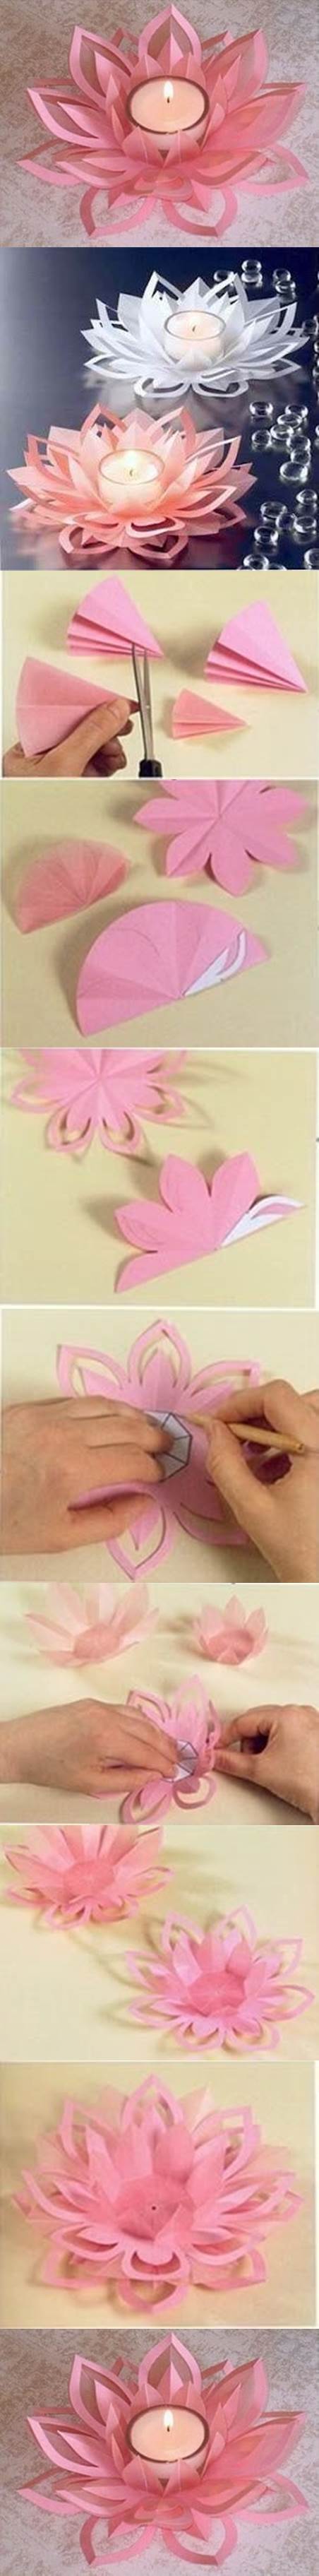 DIY Paper Lotus Candlestick